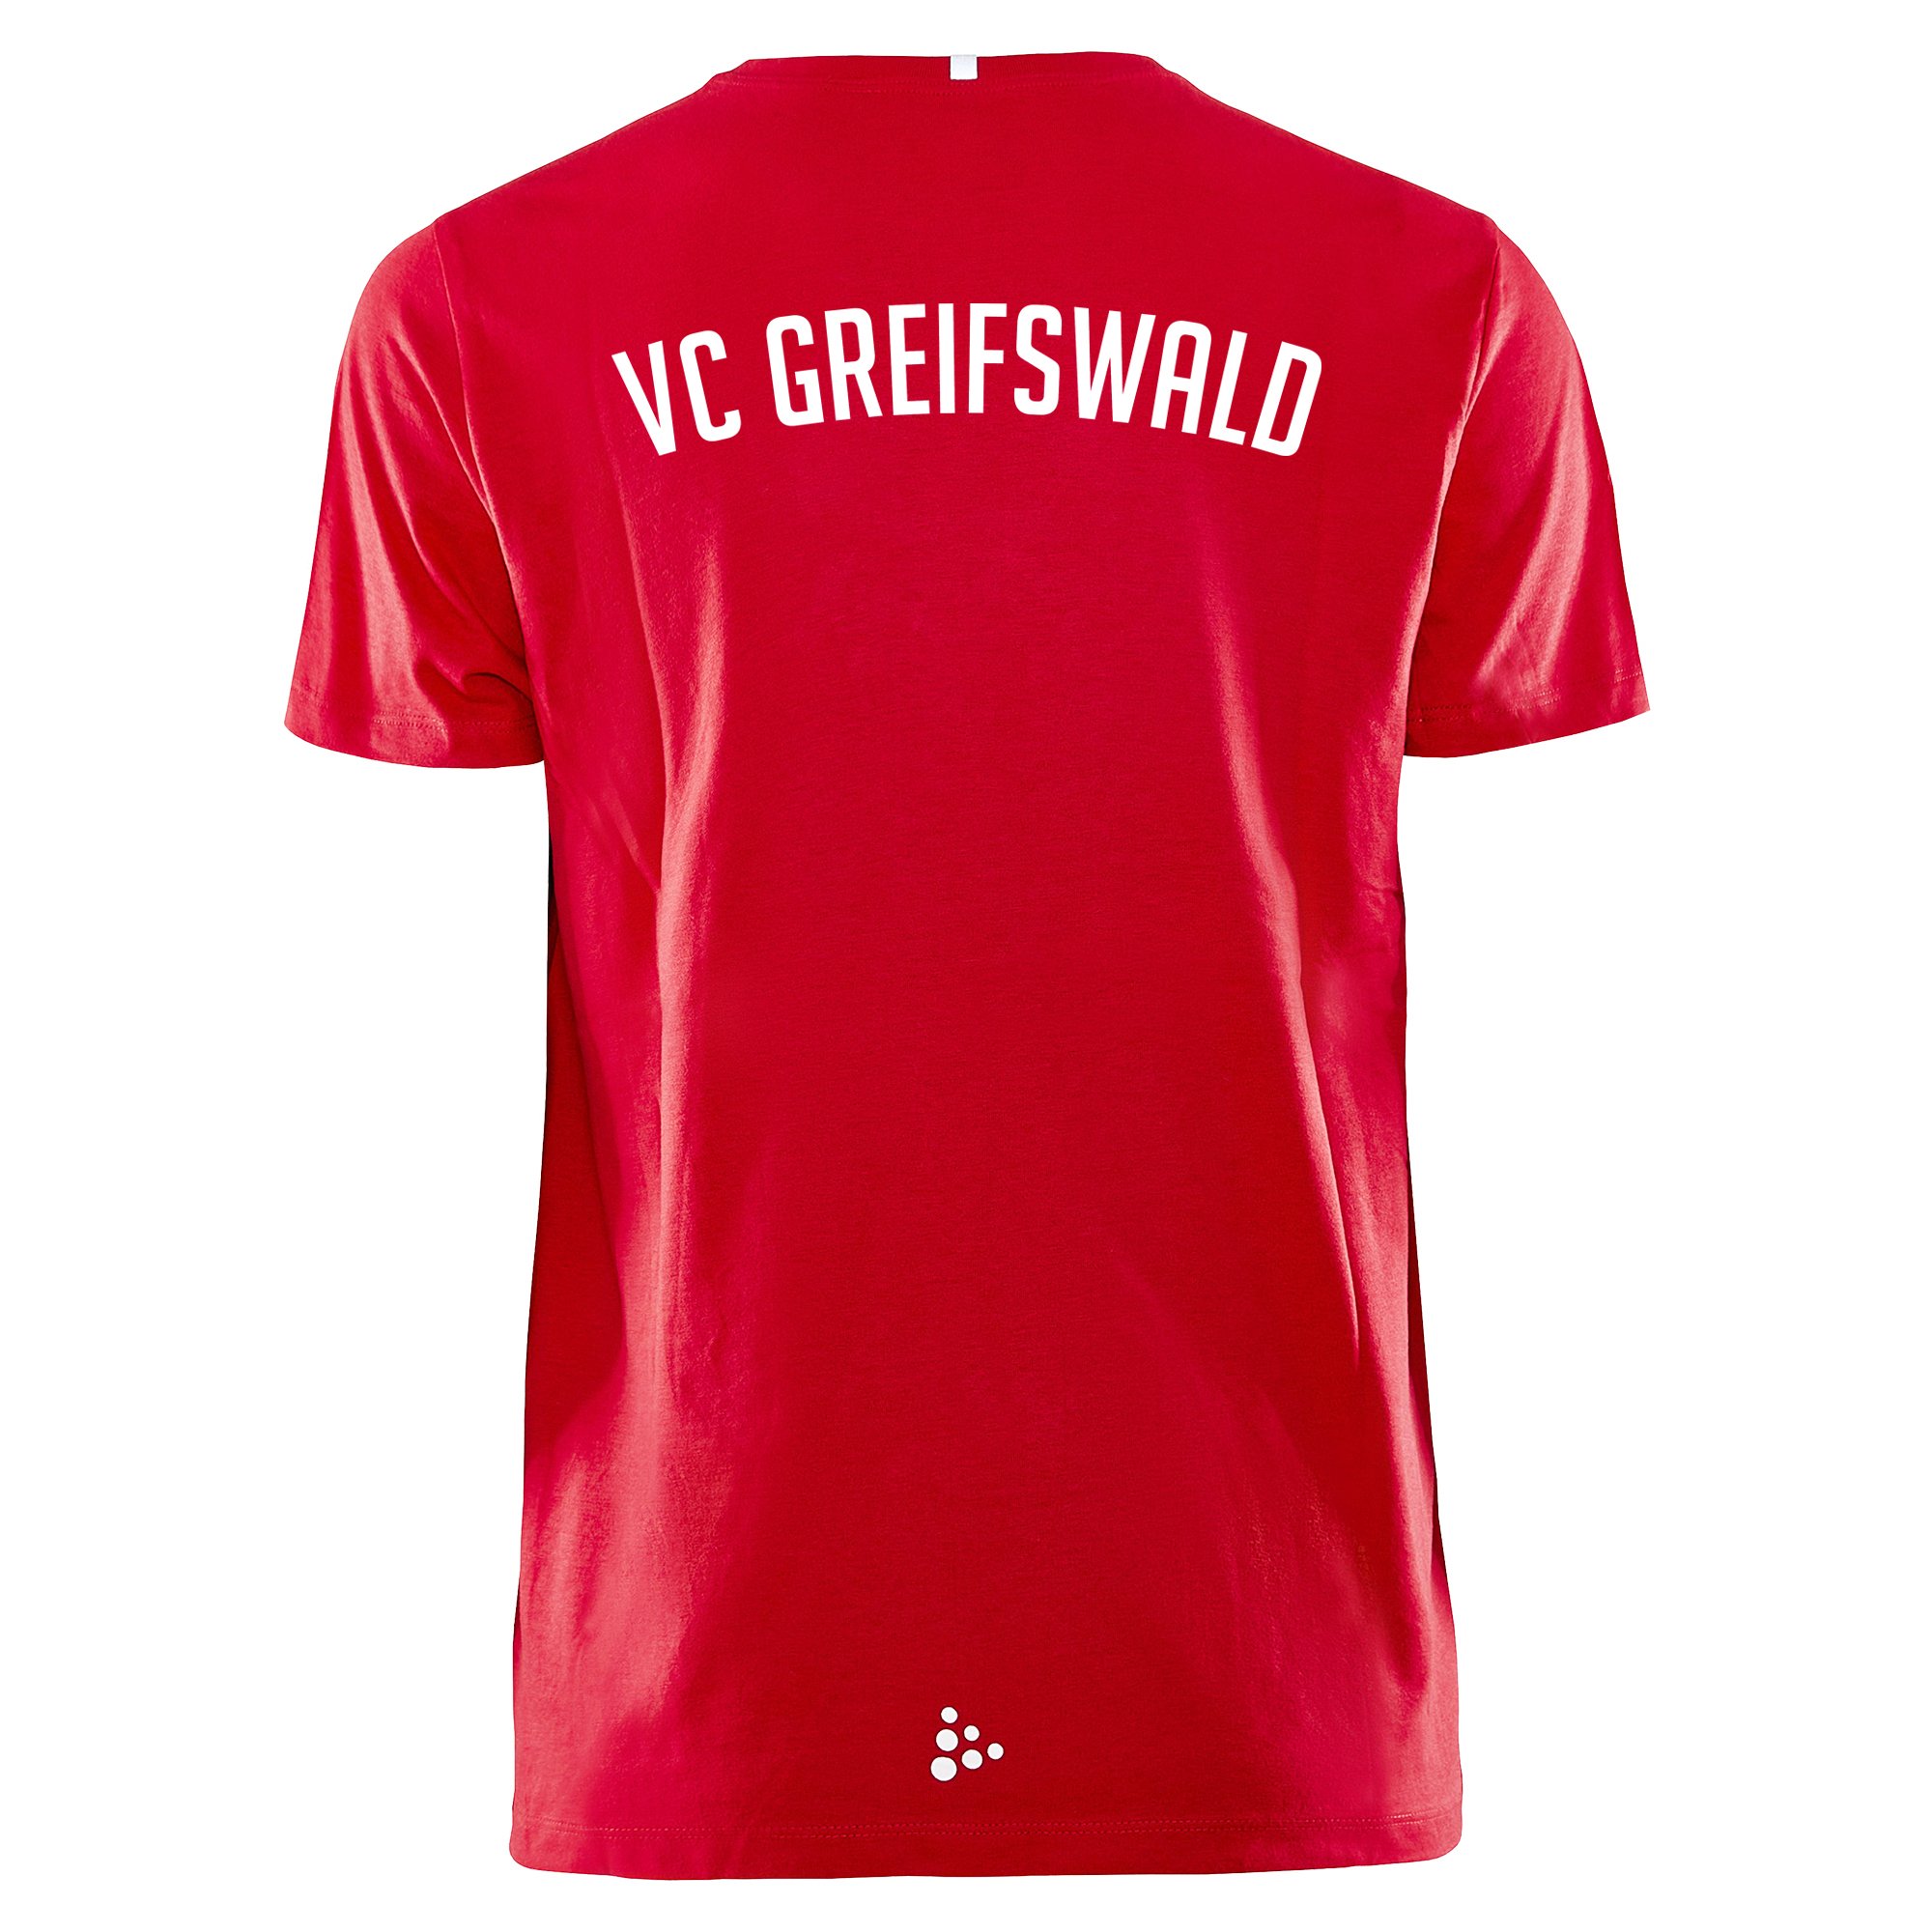 VC Greifswald T-Shirt